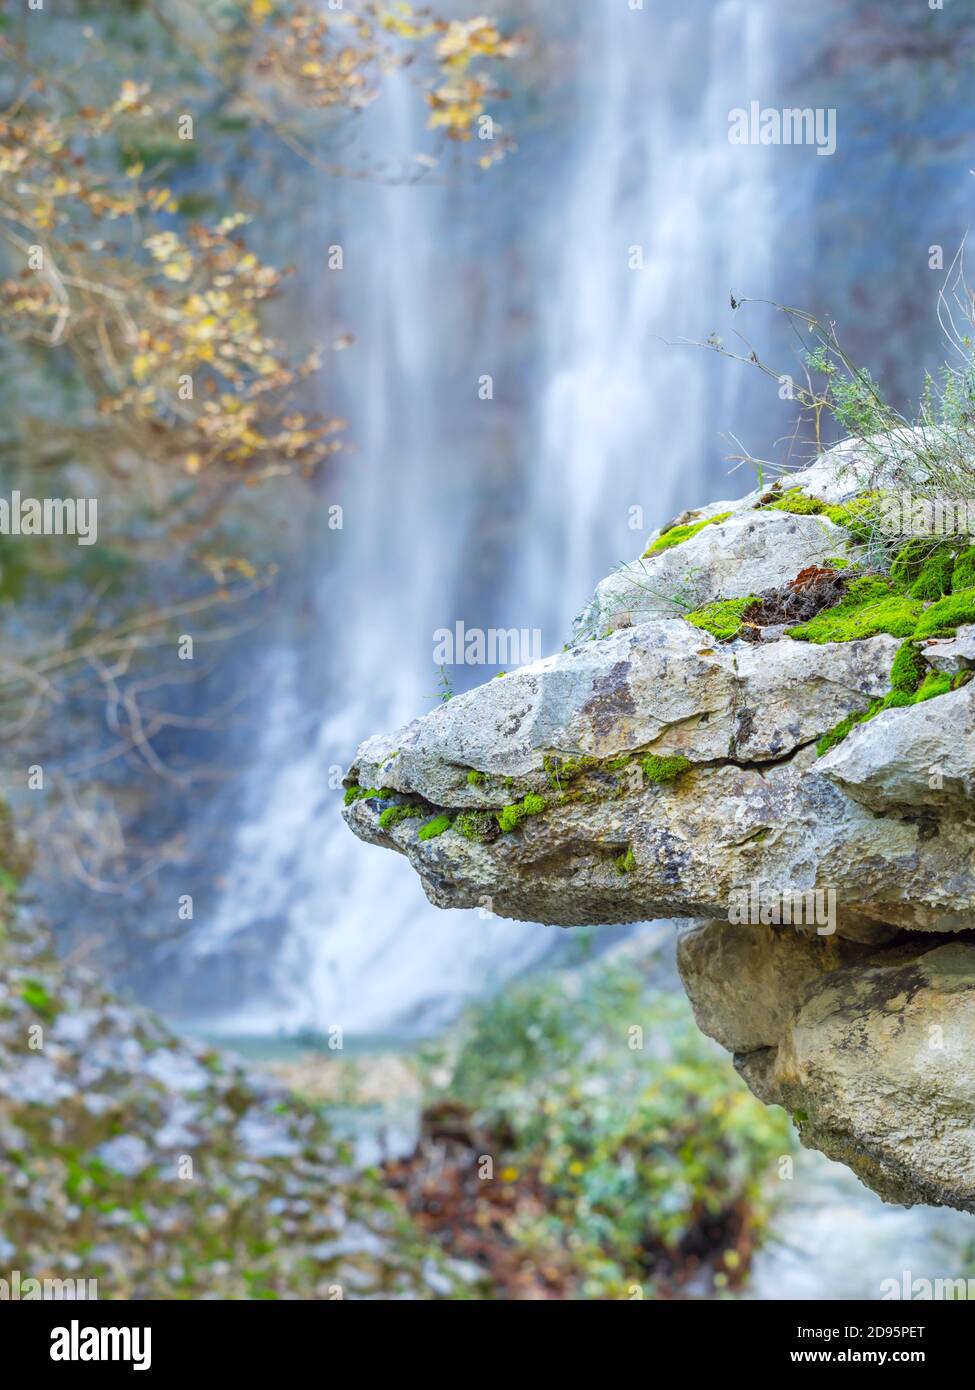 Big boulder rock balancing balance in Benkovski slap waterfall near Pican in Croatia Europe focus on rock Stock Photo